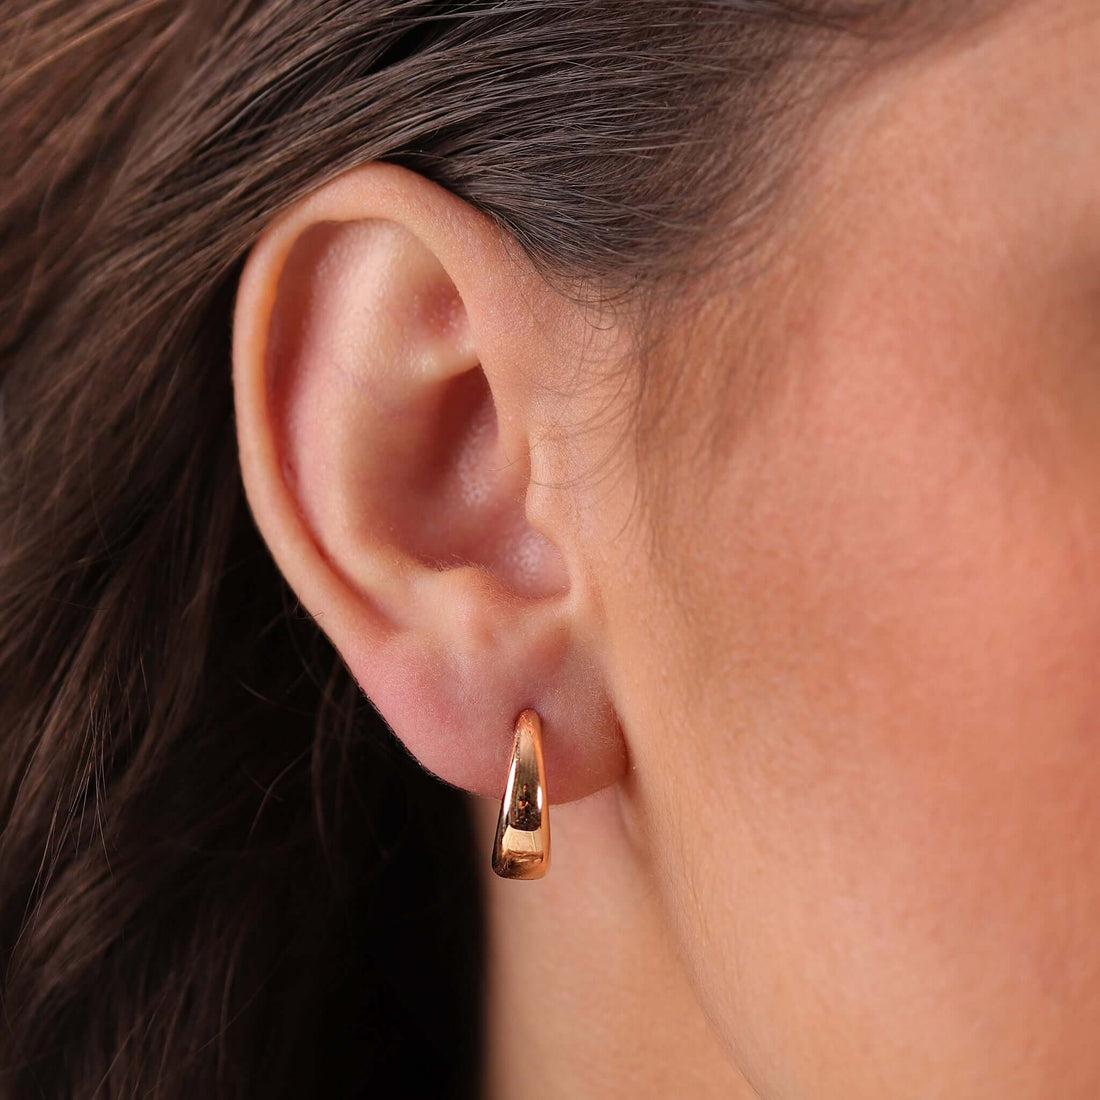 Jewelry Goldens Hoops | Gold Earrings | 14K - Rose / Pair - earrings Zengoda Shop online from Artisan Brands